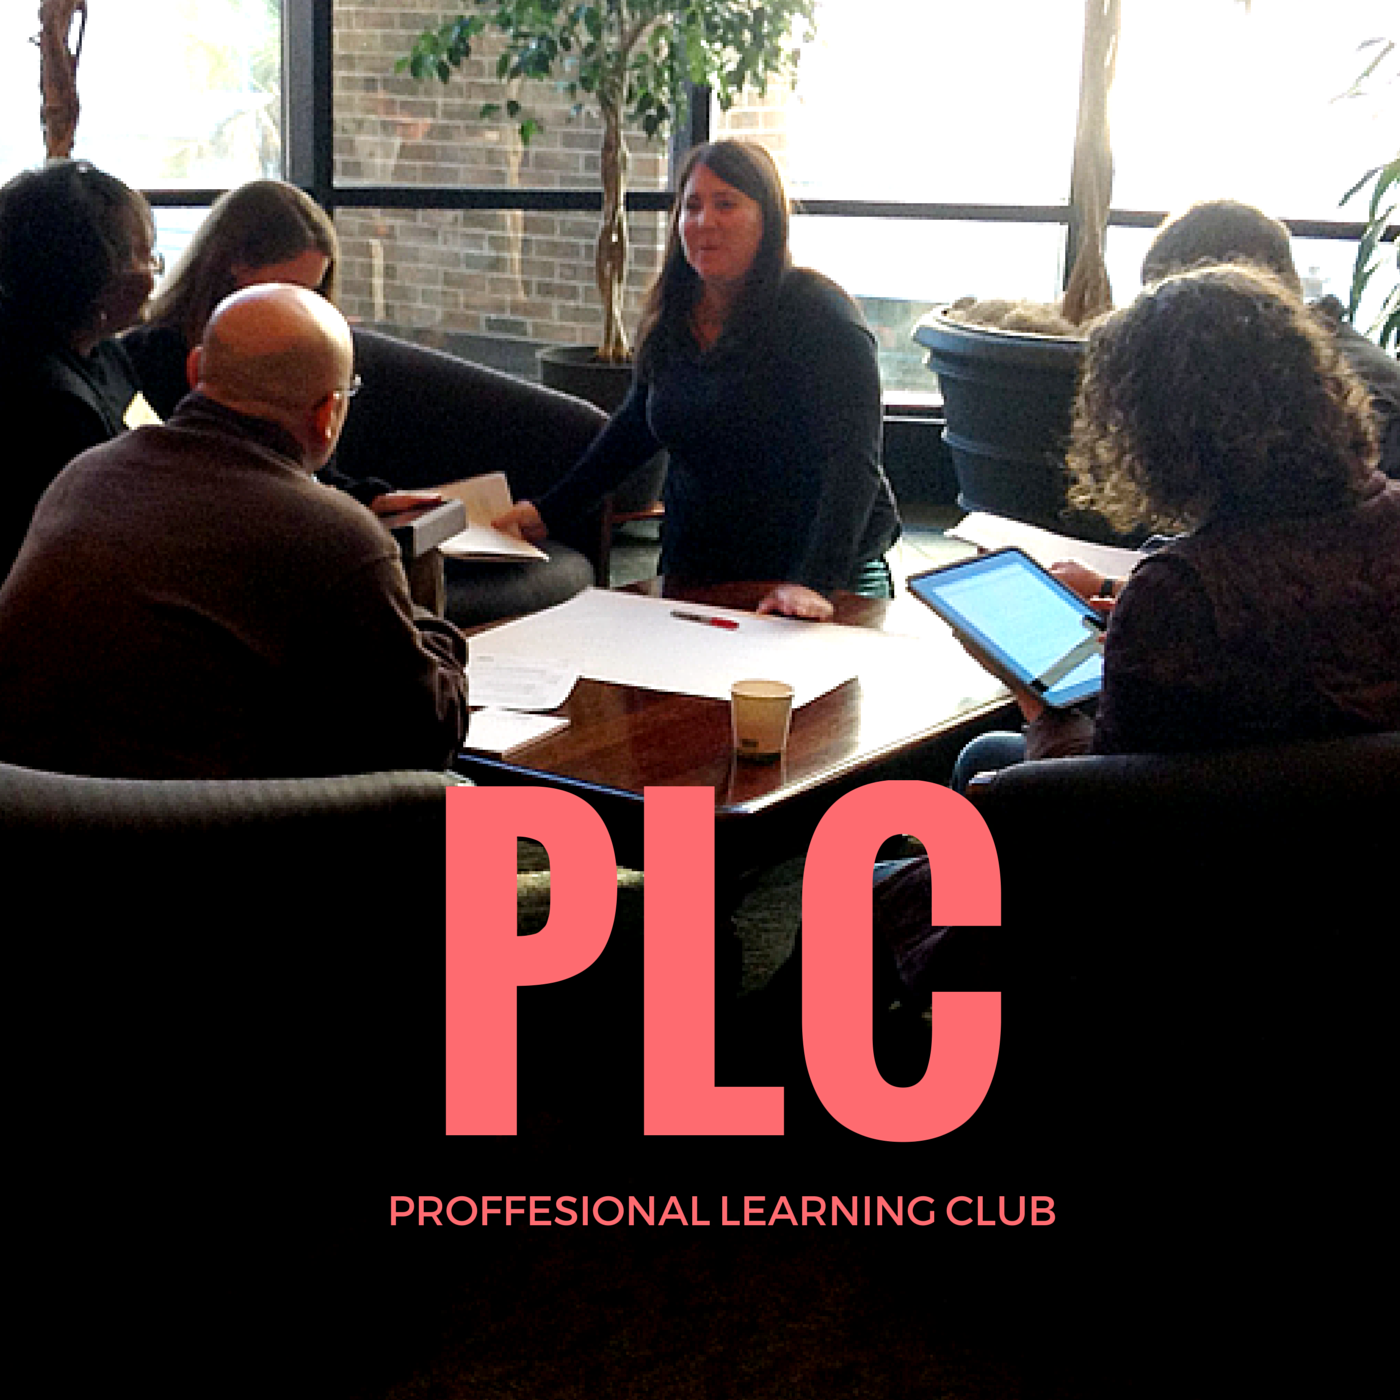 P. L. C. Professional Learning Club